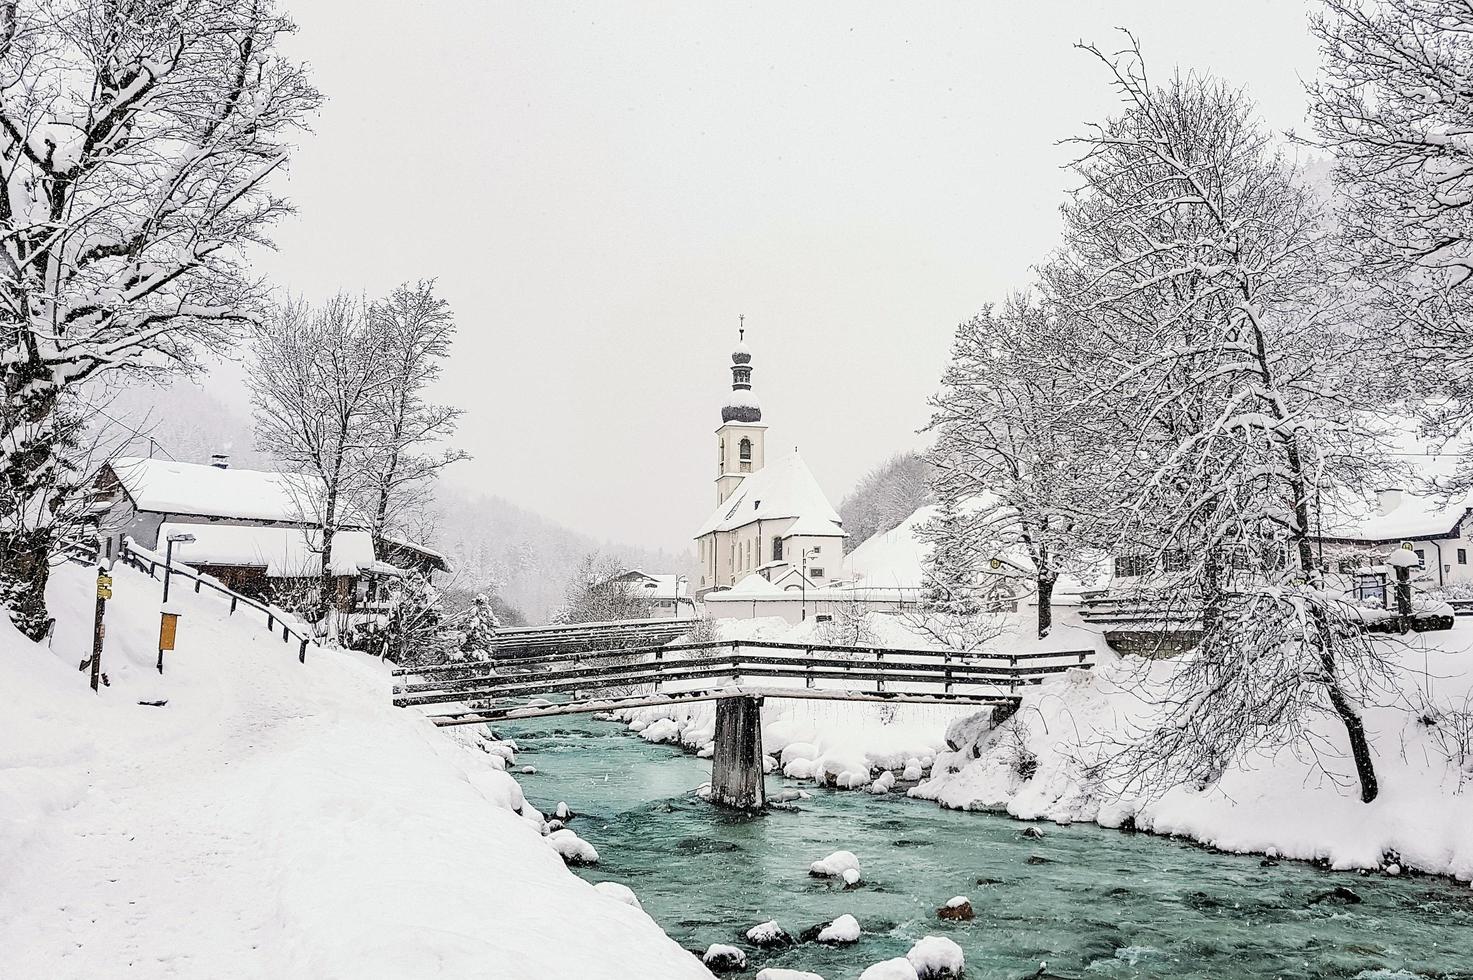 Scenic winter landscape in the Bavarian Alps photo